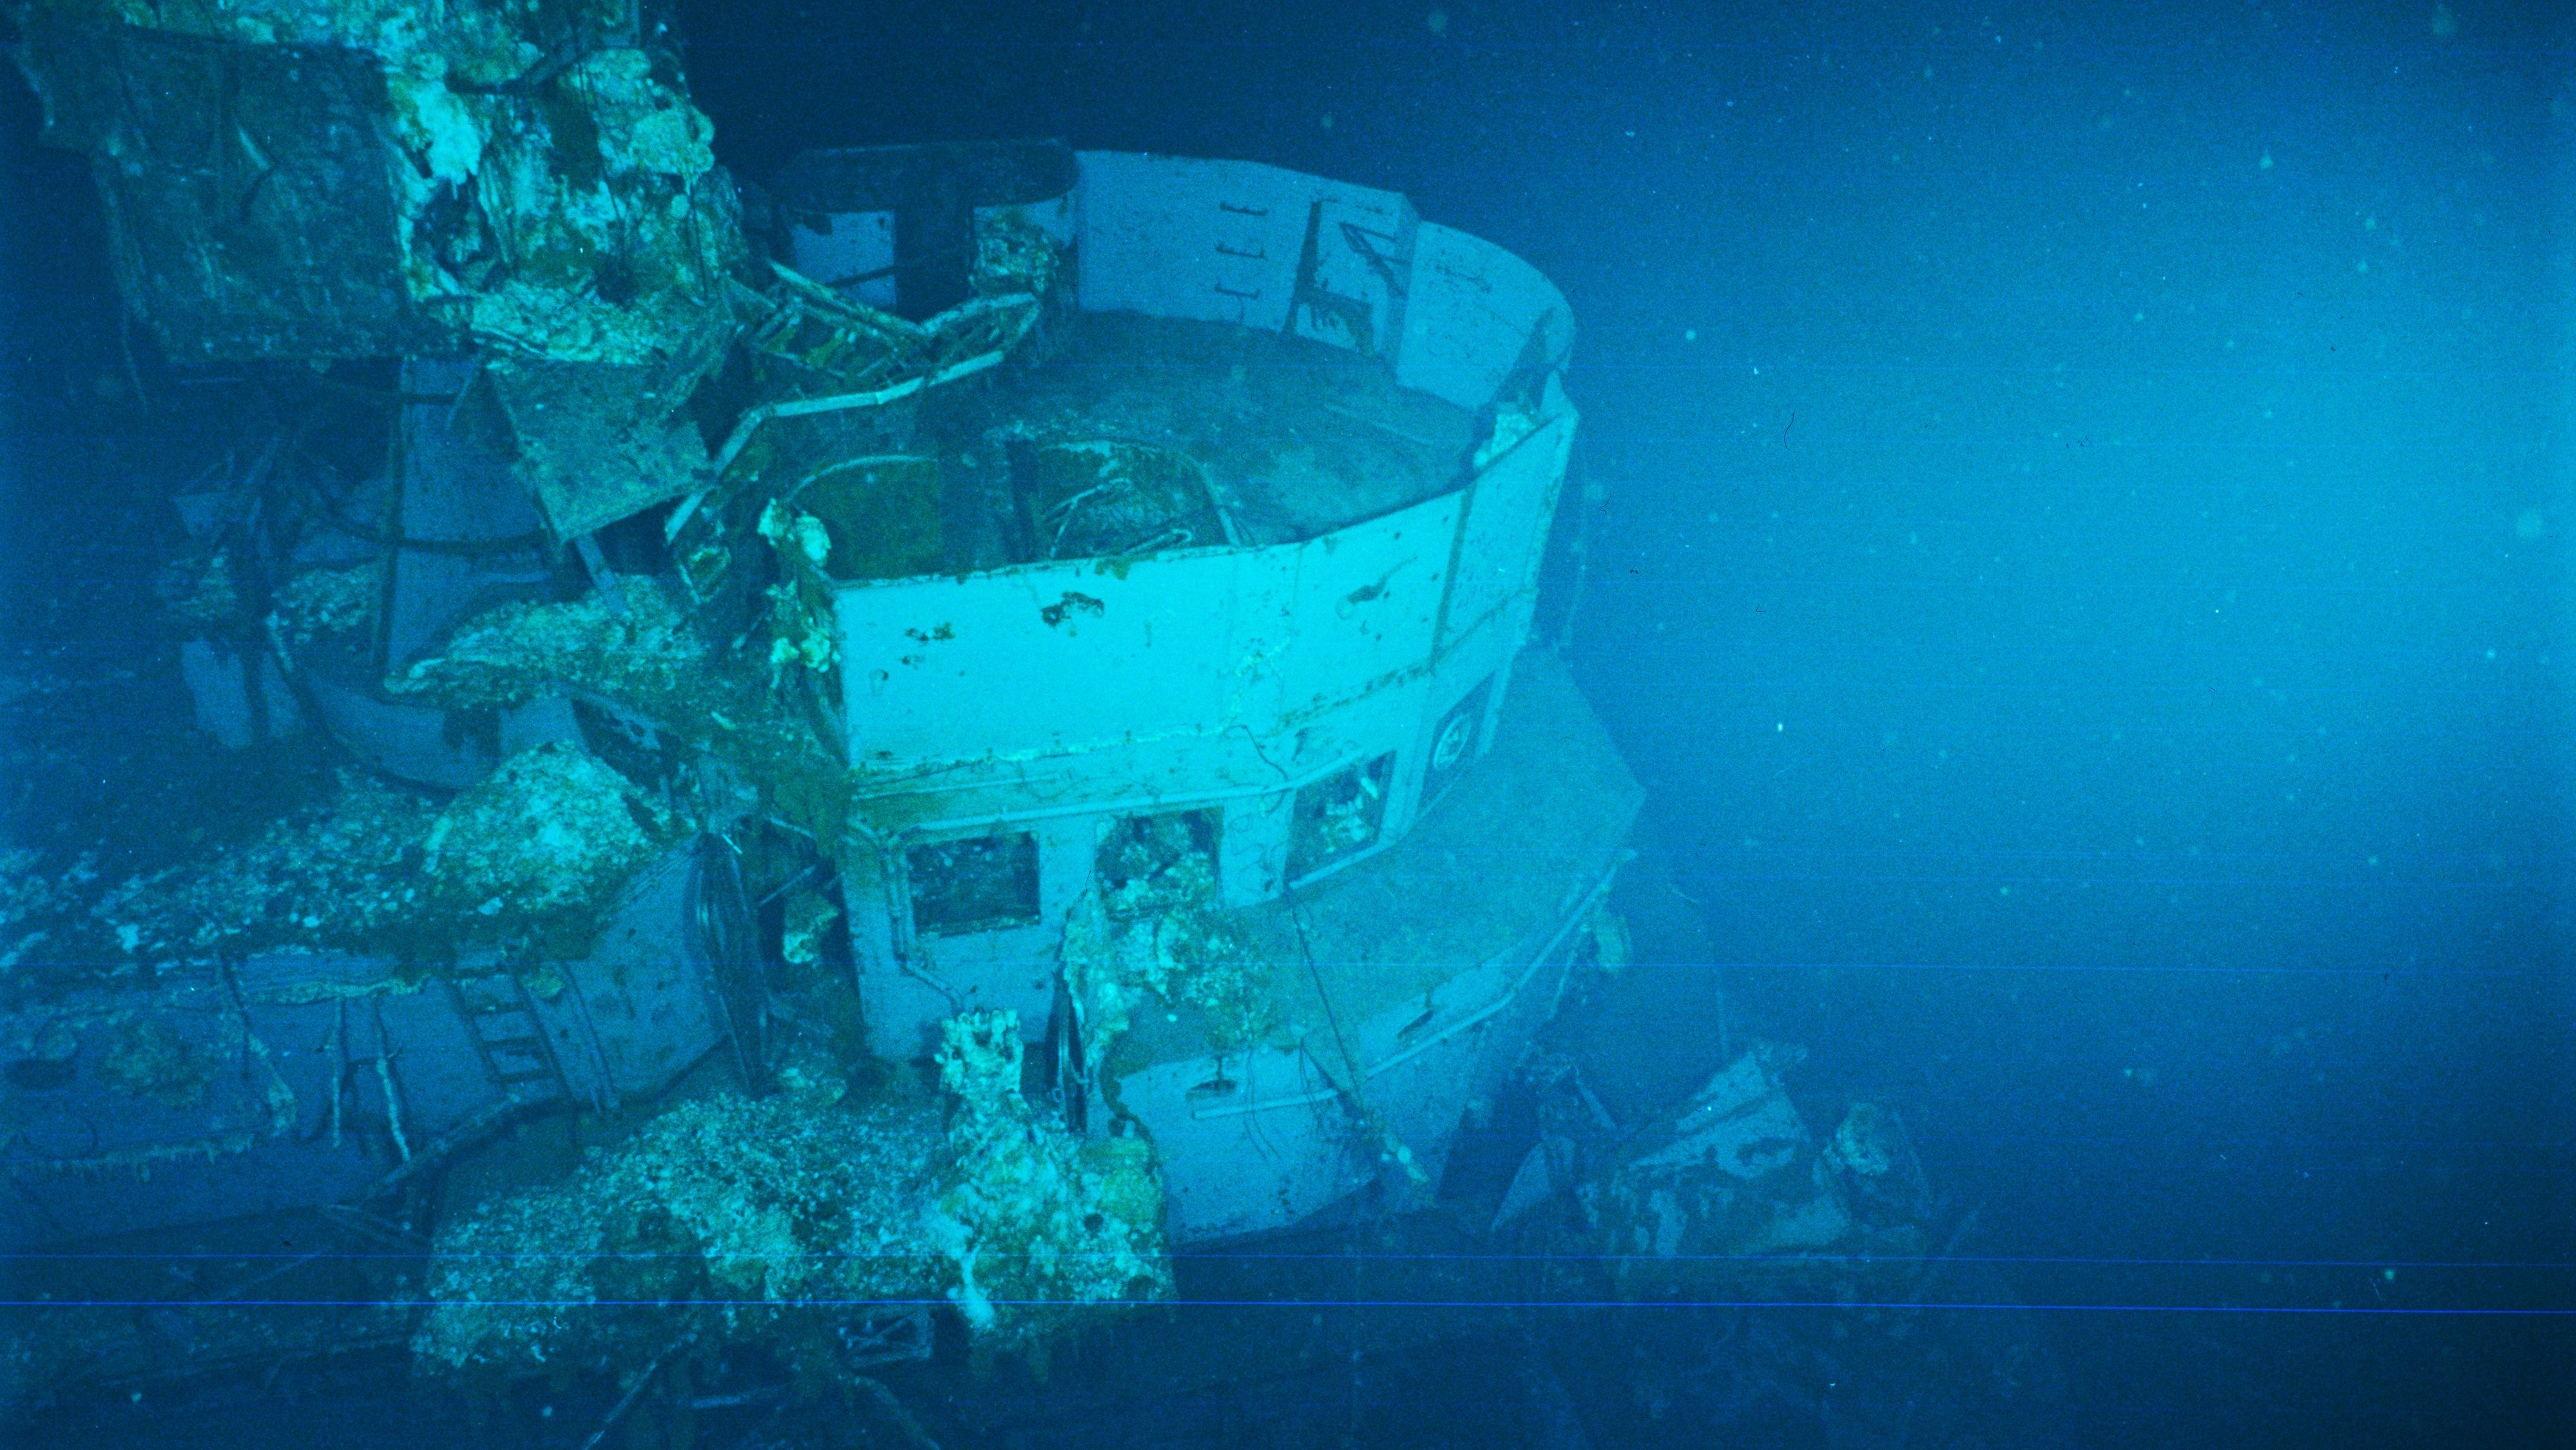 Robert Ballard: The man who found the Titanic has a new quest | CNN